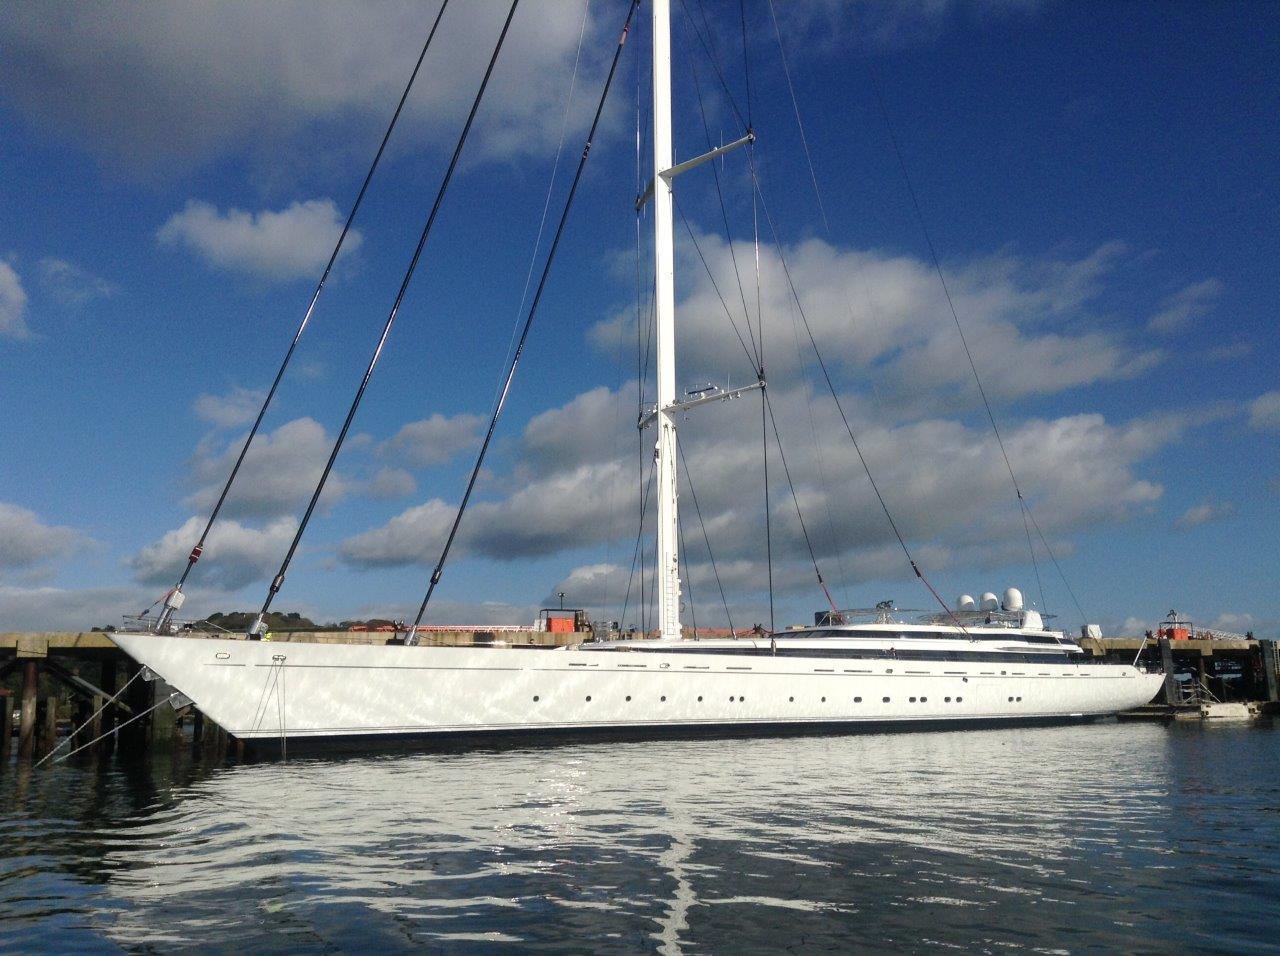 mirabella 5 yacht